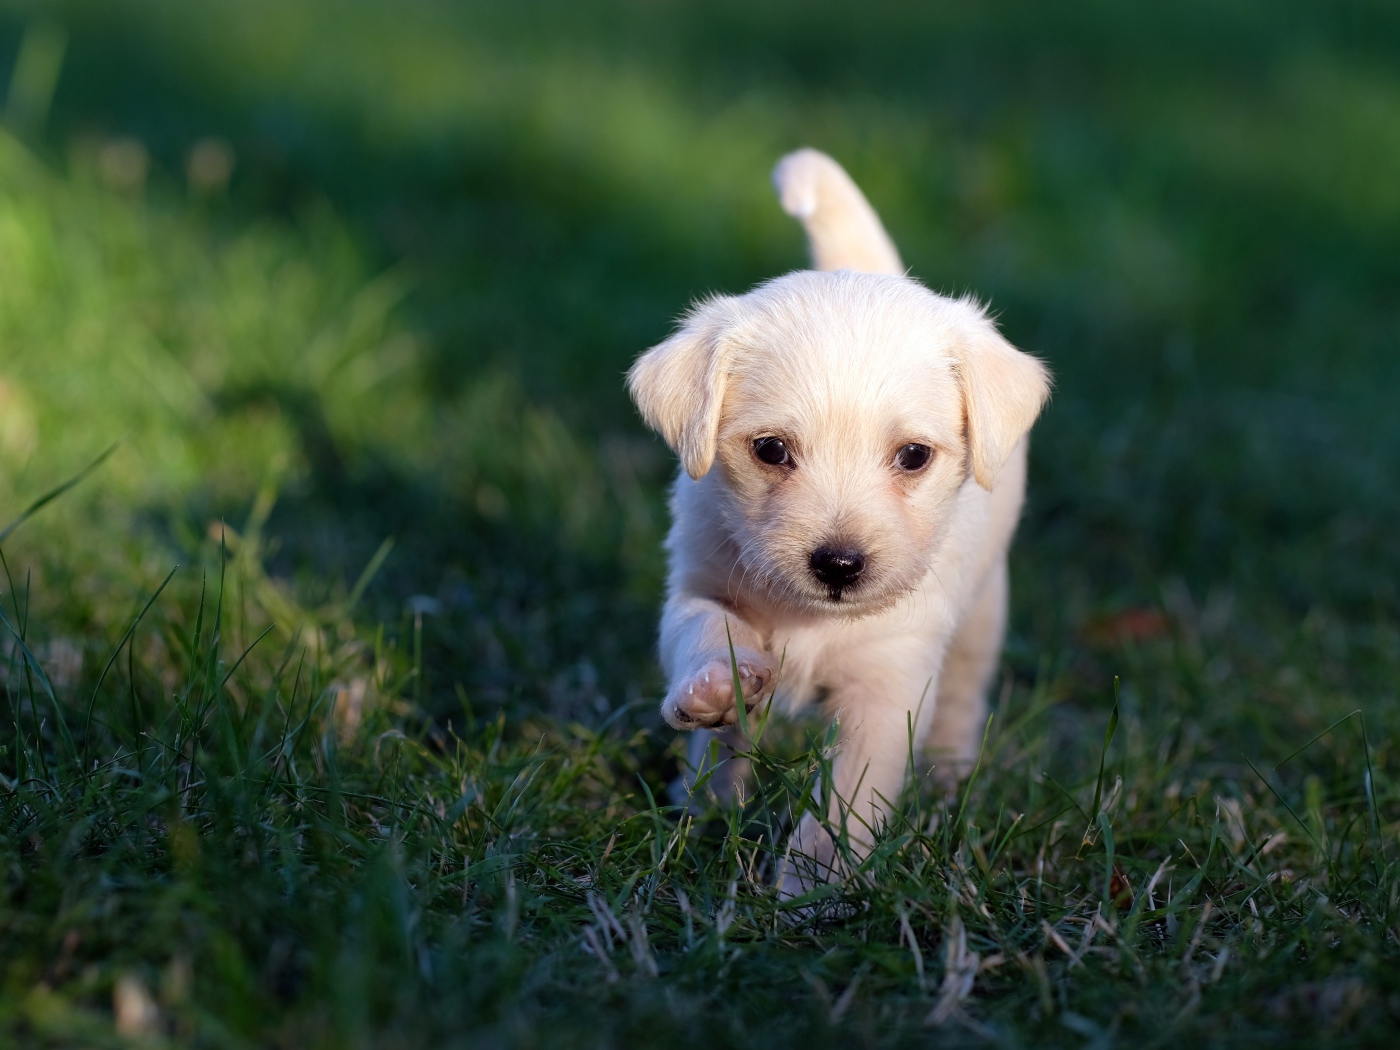 Little white puppy walking on green grass